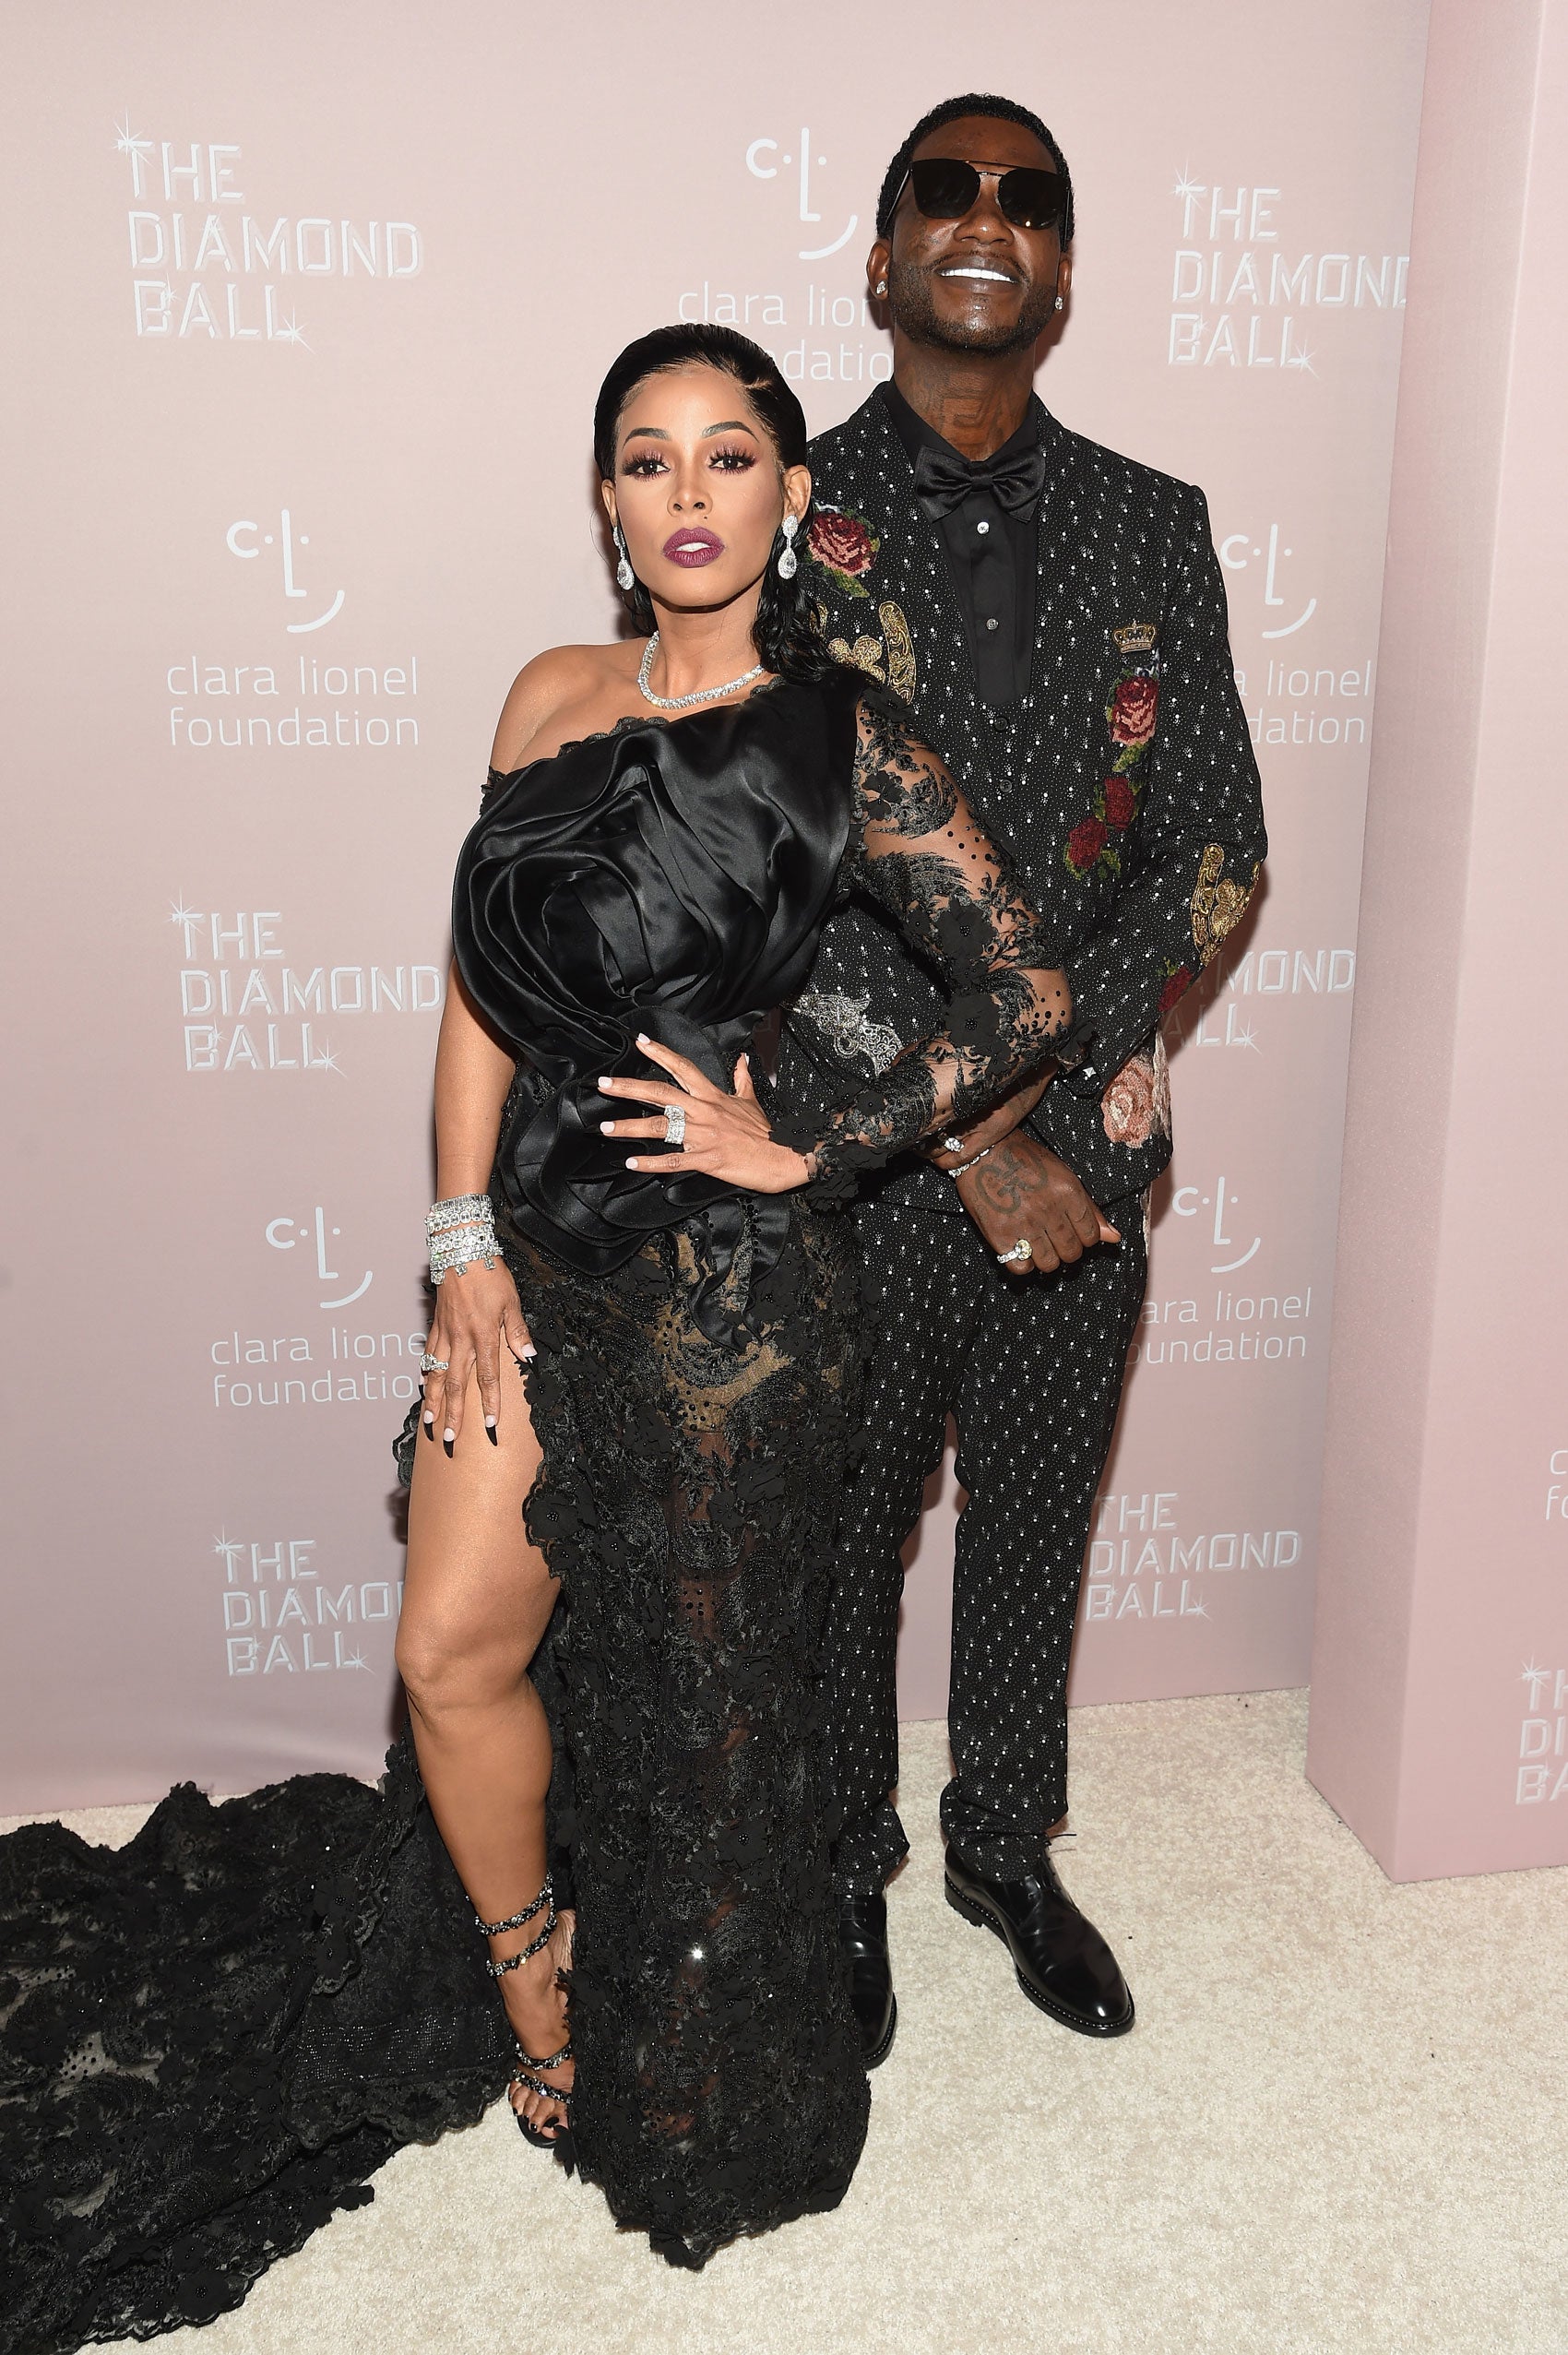 Gucci Mane and Wife Keyshia Ka'oir Expecting a Baby Boy